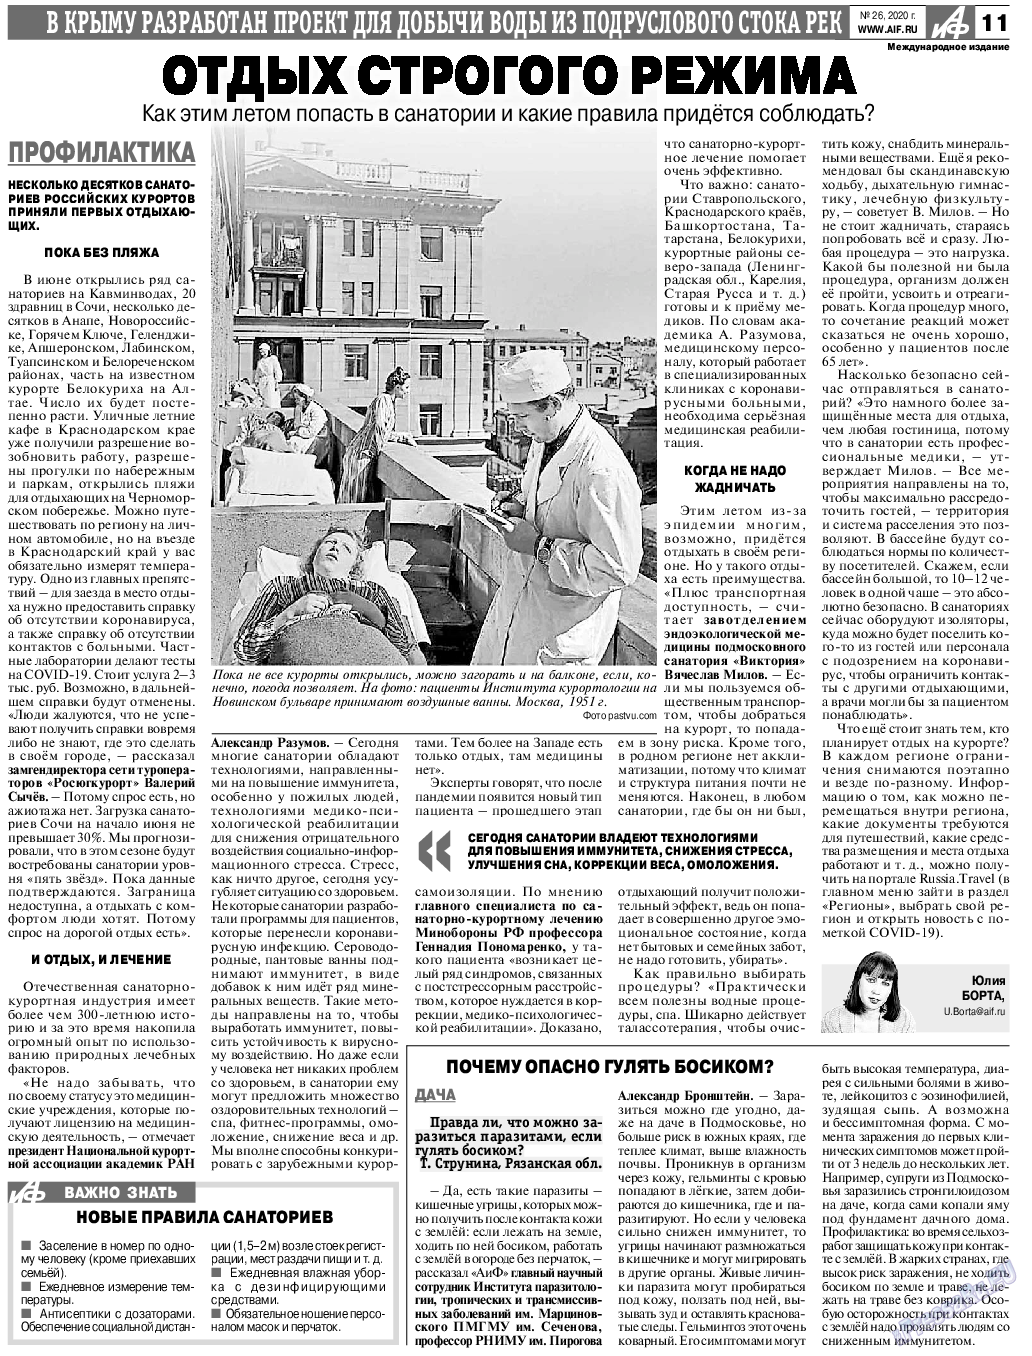 Аргументы и факты Европа, газета. 2020 №26 стр.11